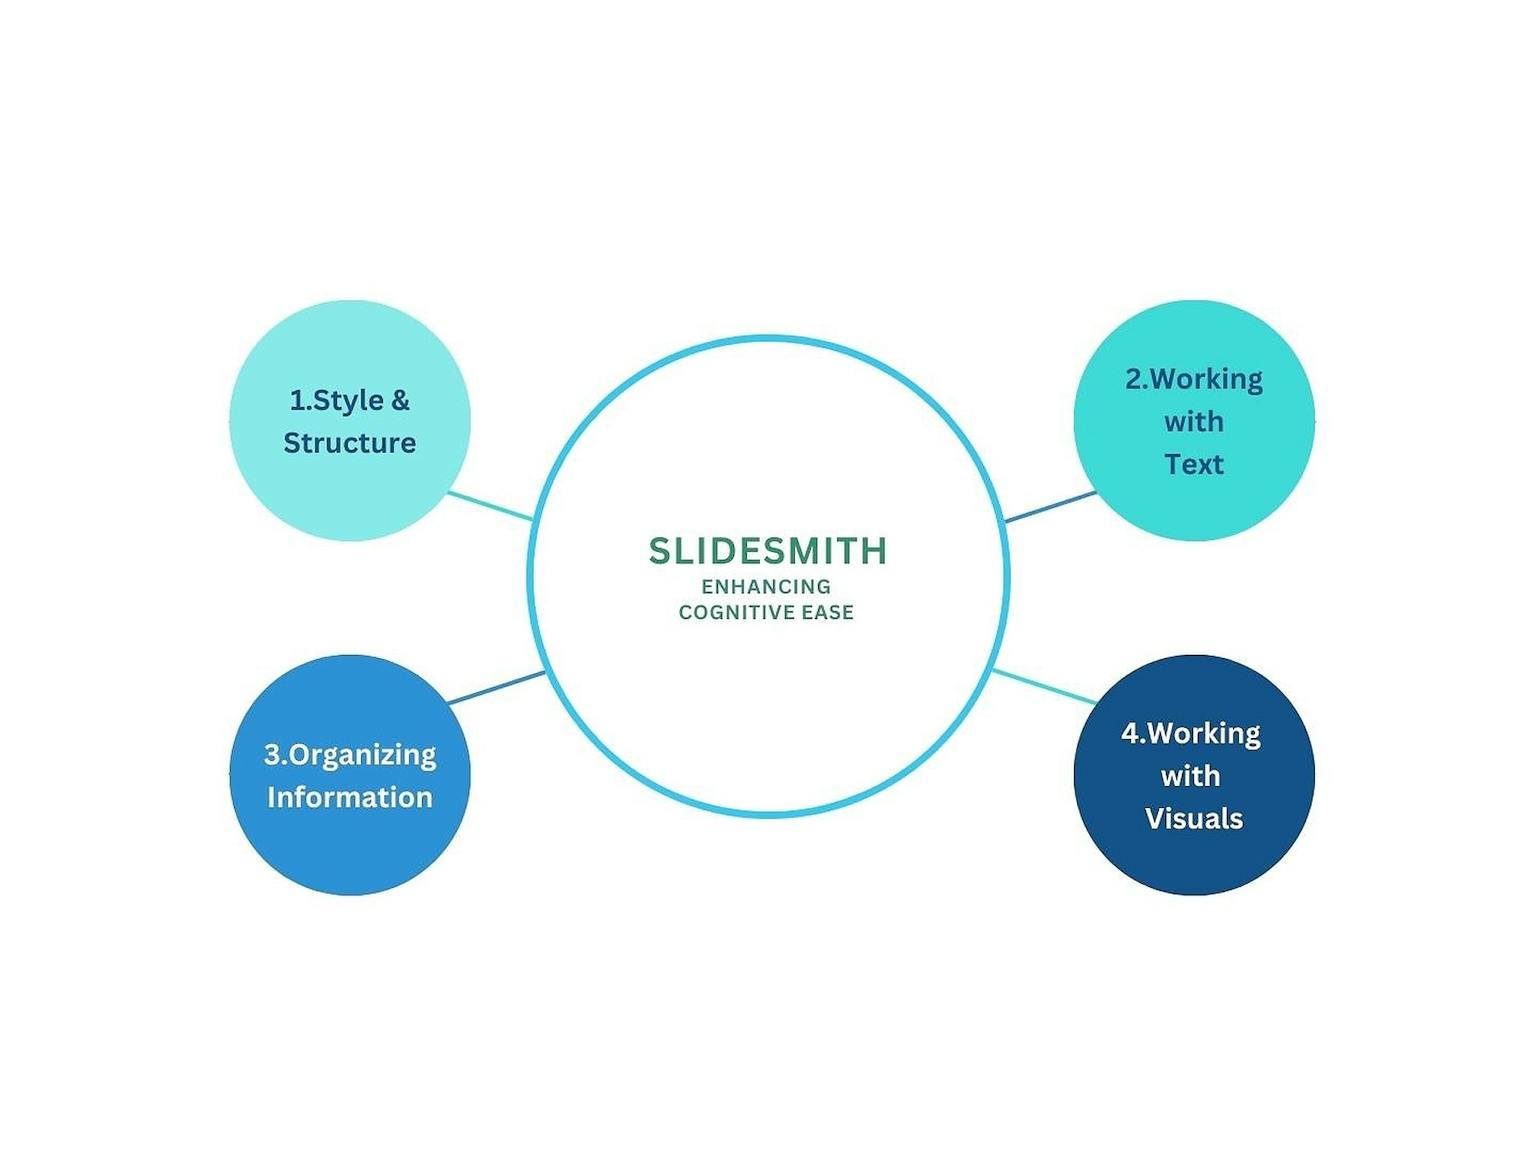 Becoming a Slidesmith Summary
